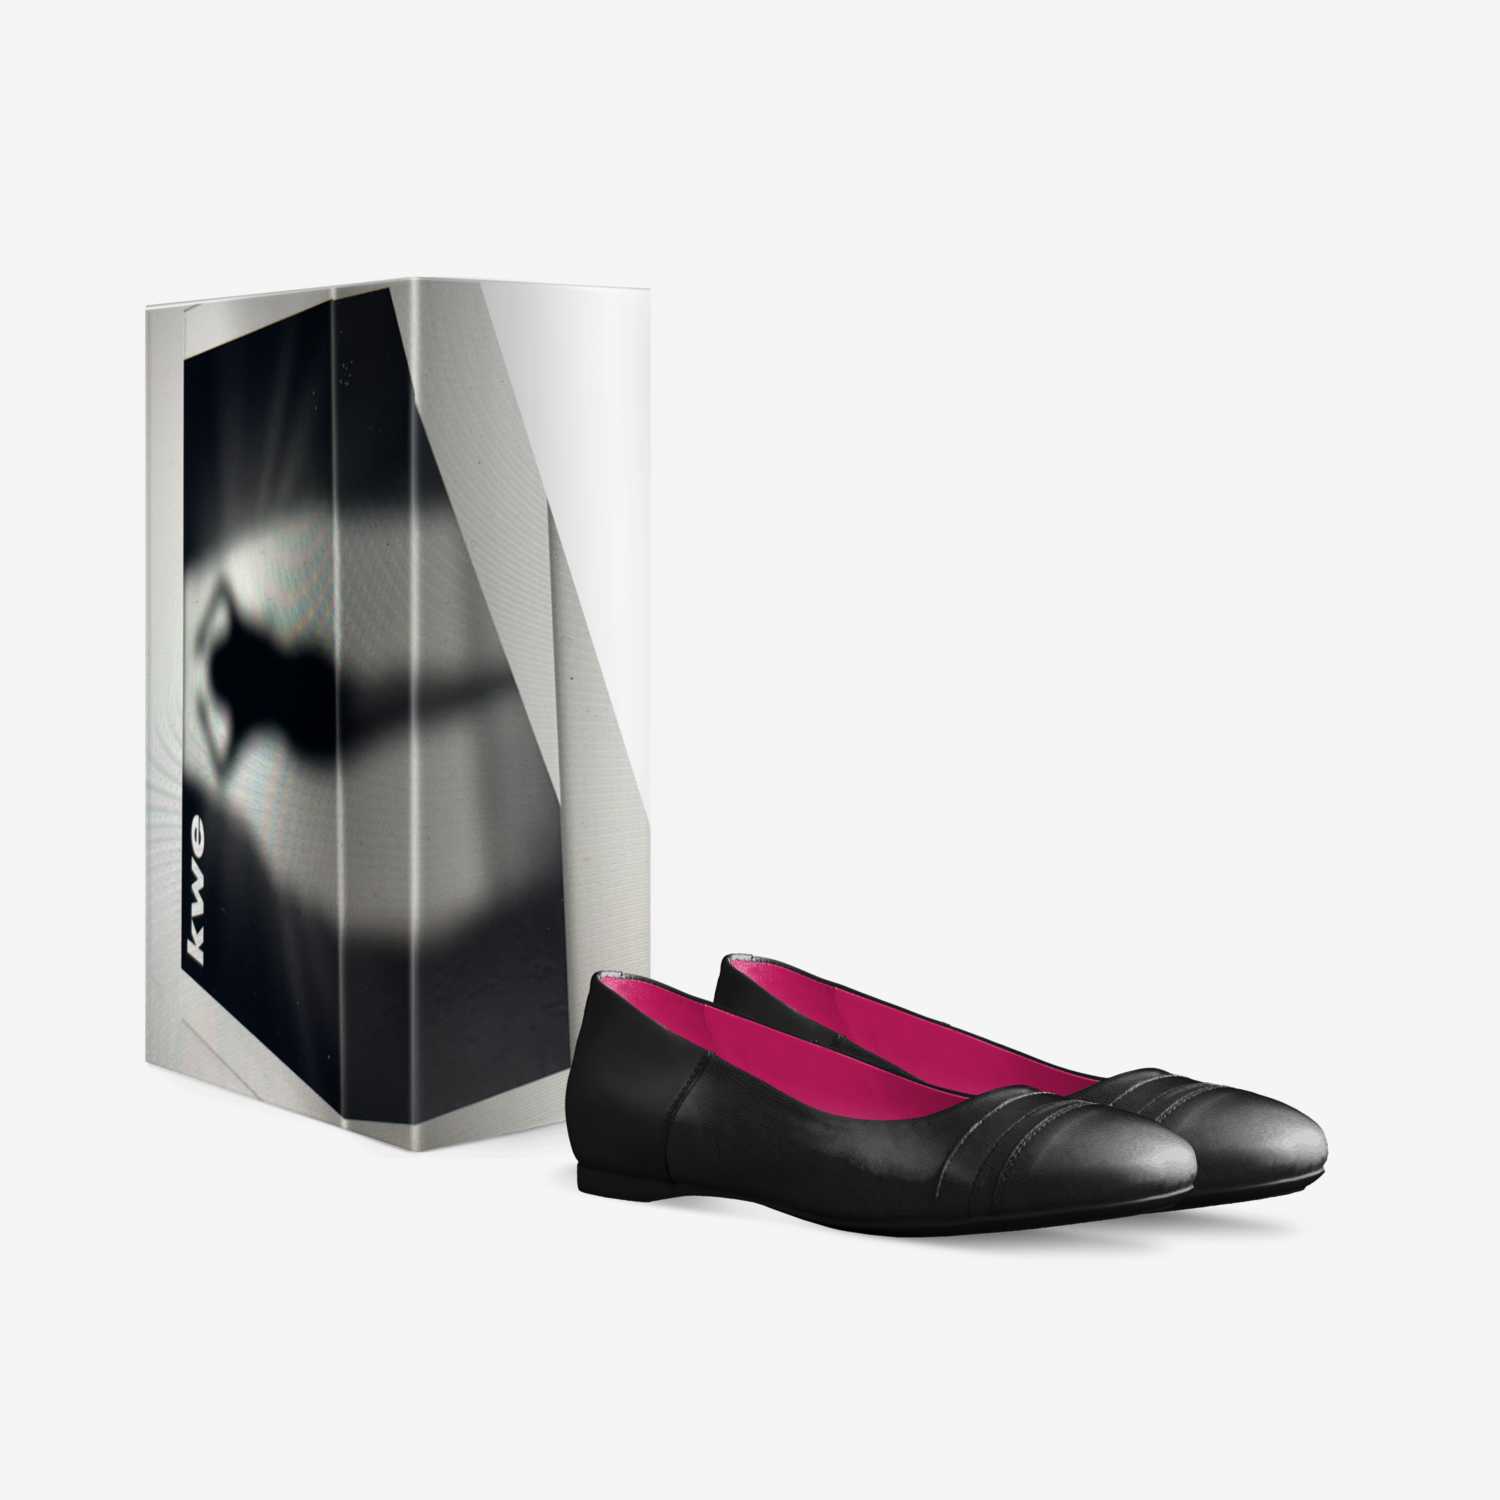 kwe 2 custom made in Italy shoes by Rhonda Head | Box view